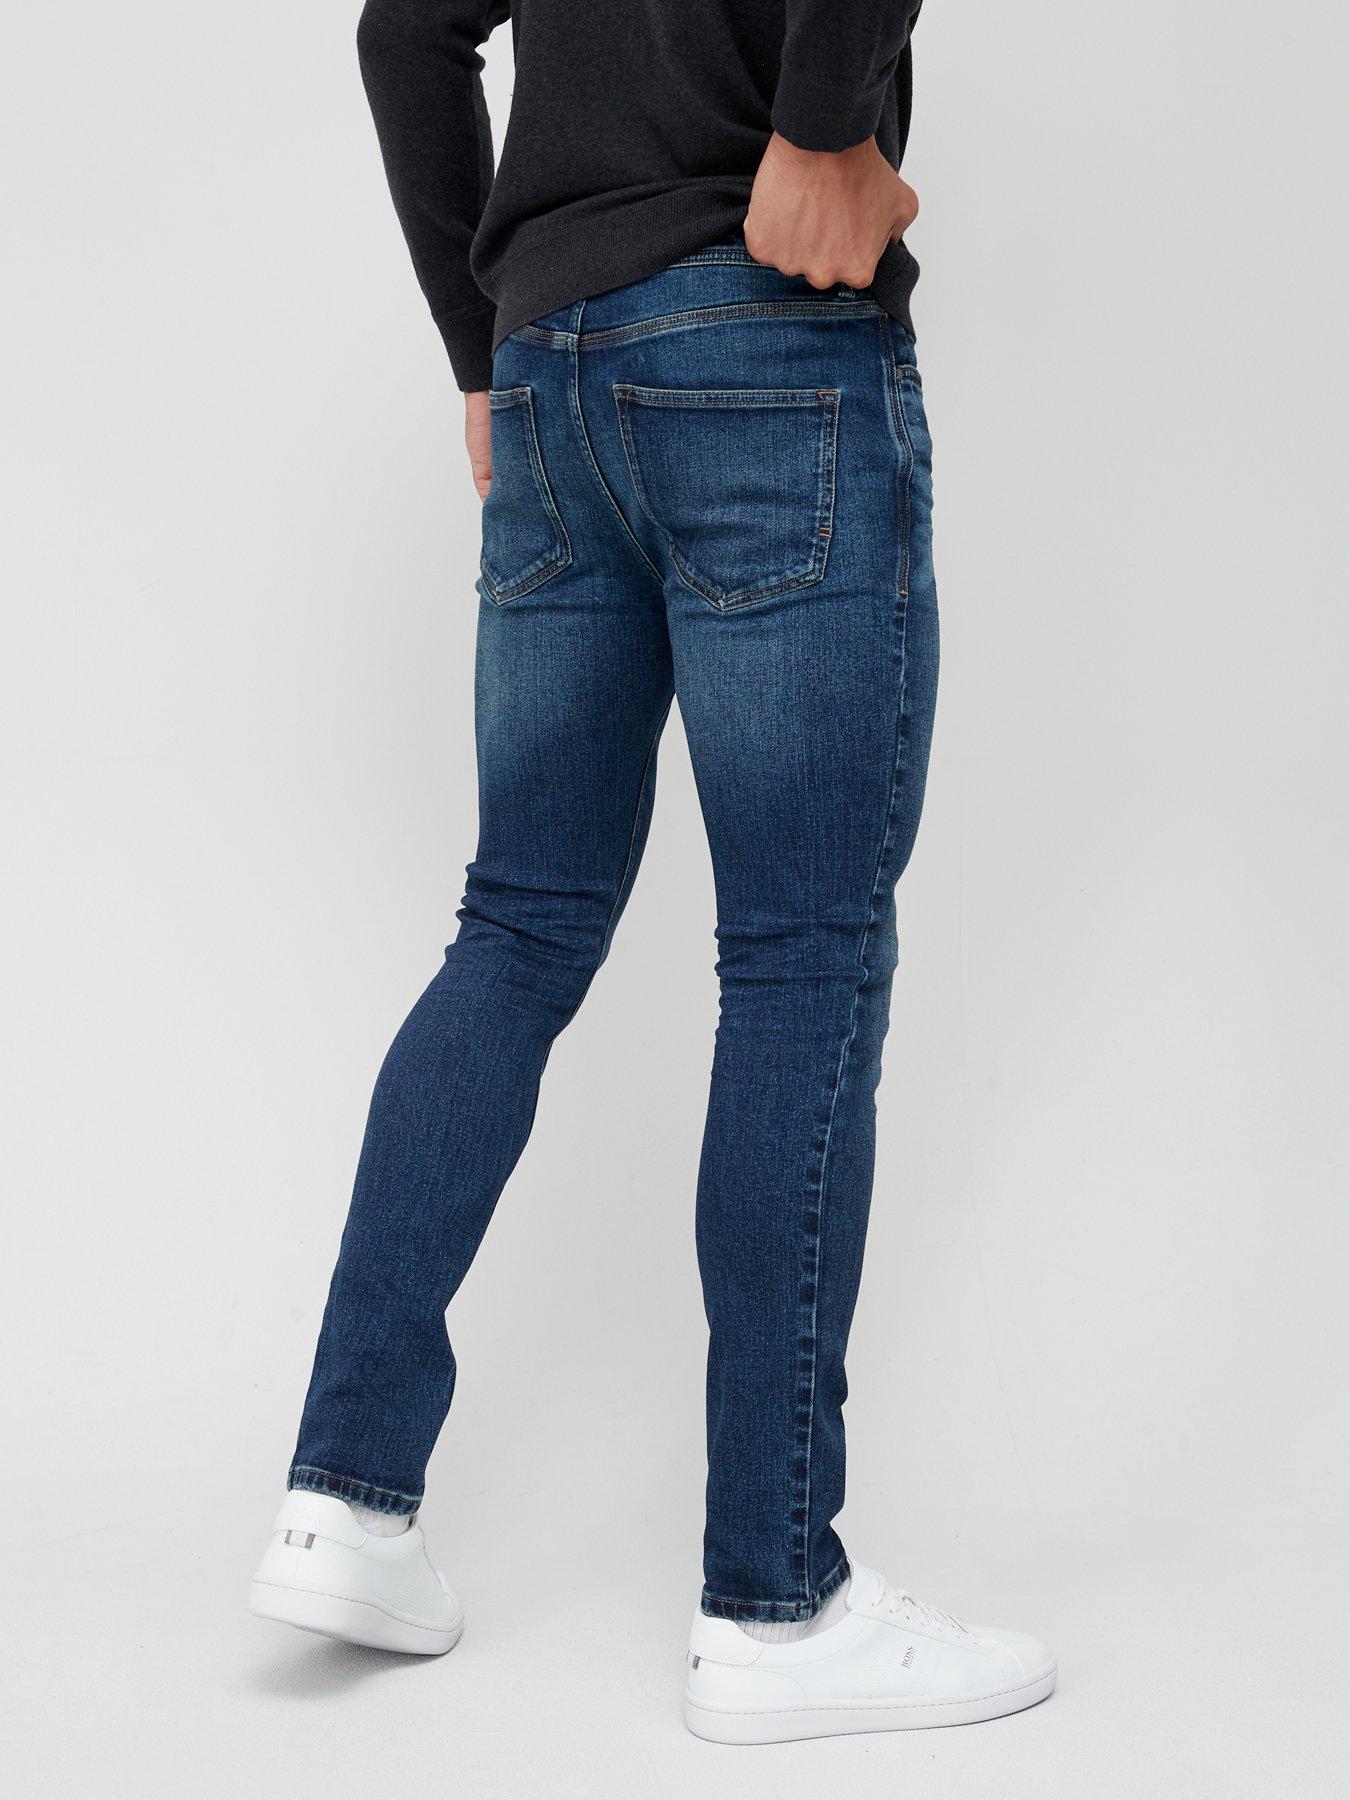 DKNY Men's Skinny Jeans - Premium Soft Stretch Jeans for Men  Skinny Fit  Mens Jeans Black Rinse at  Men's Clothing store